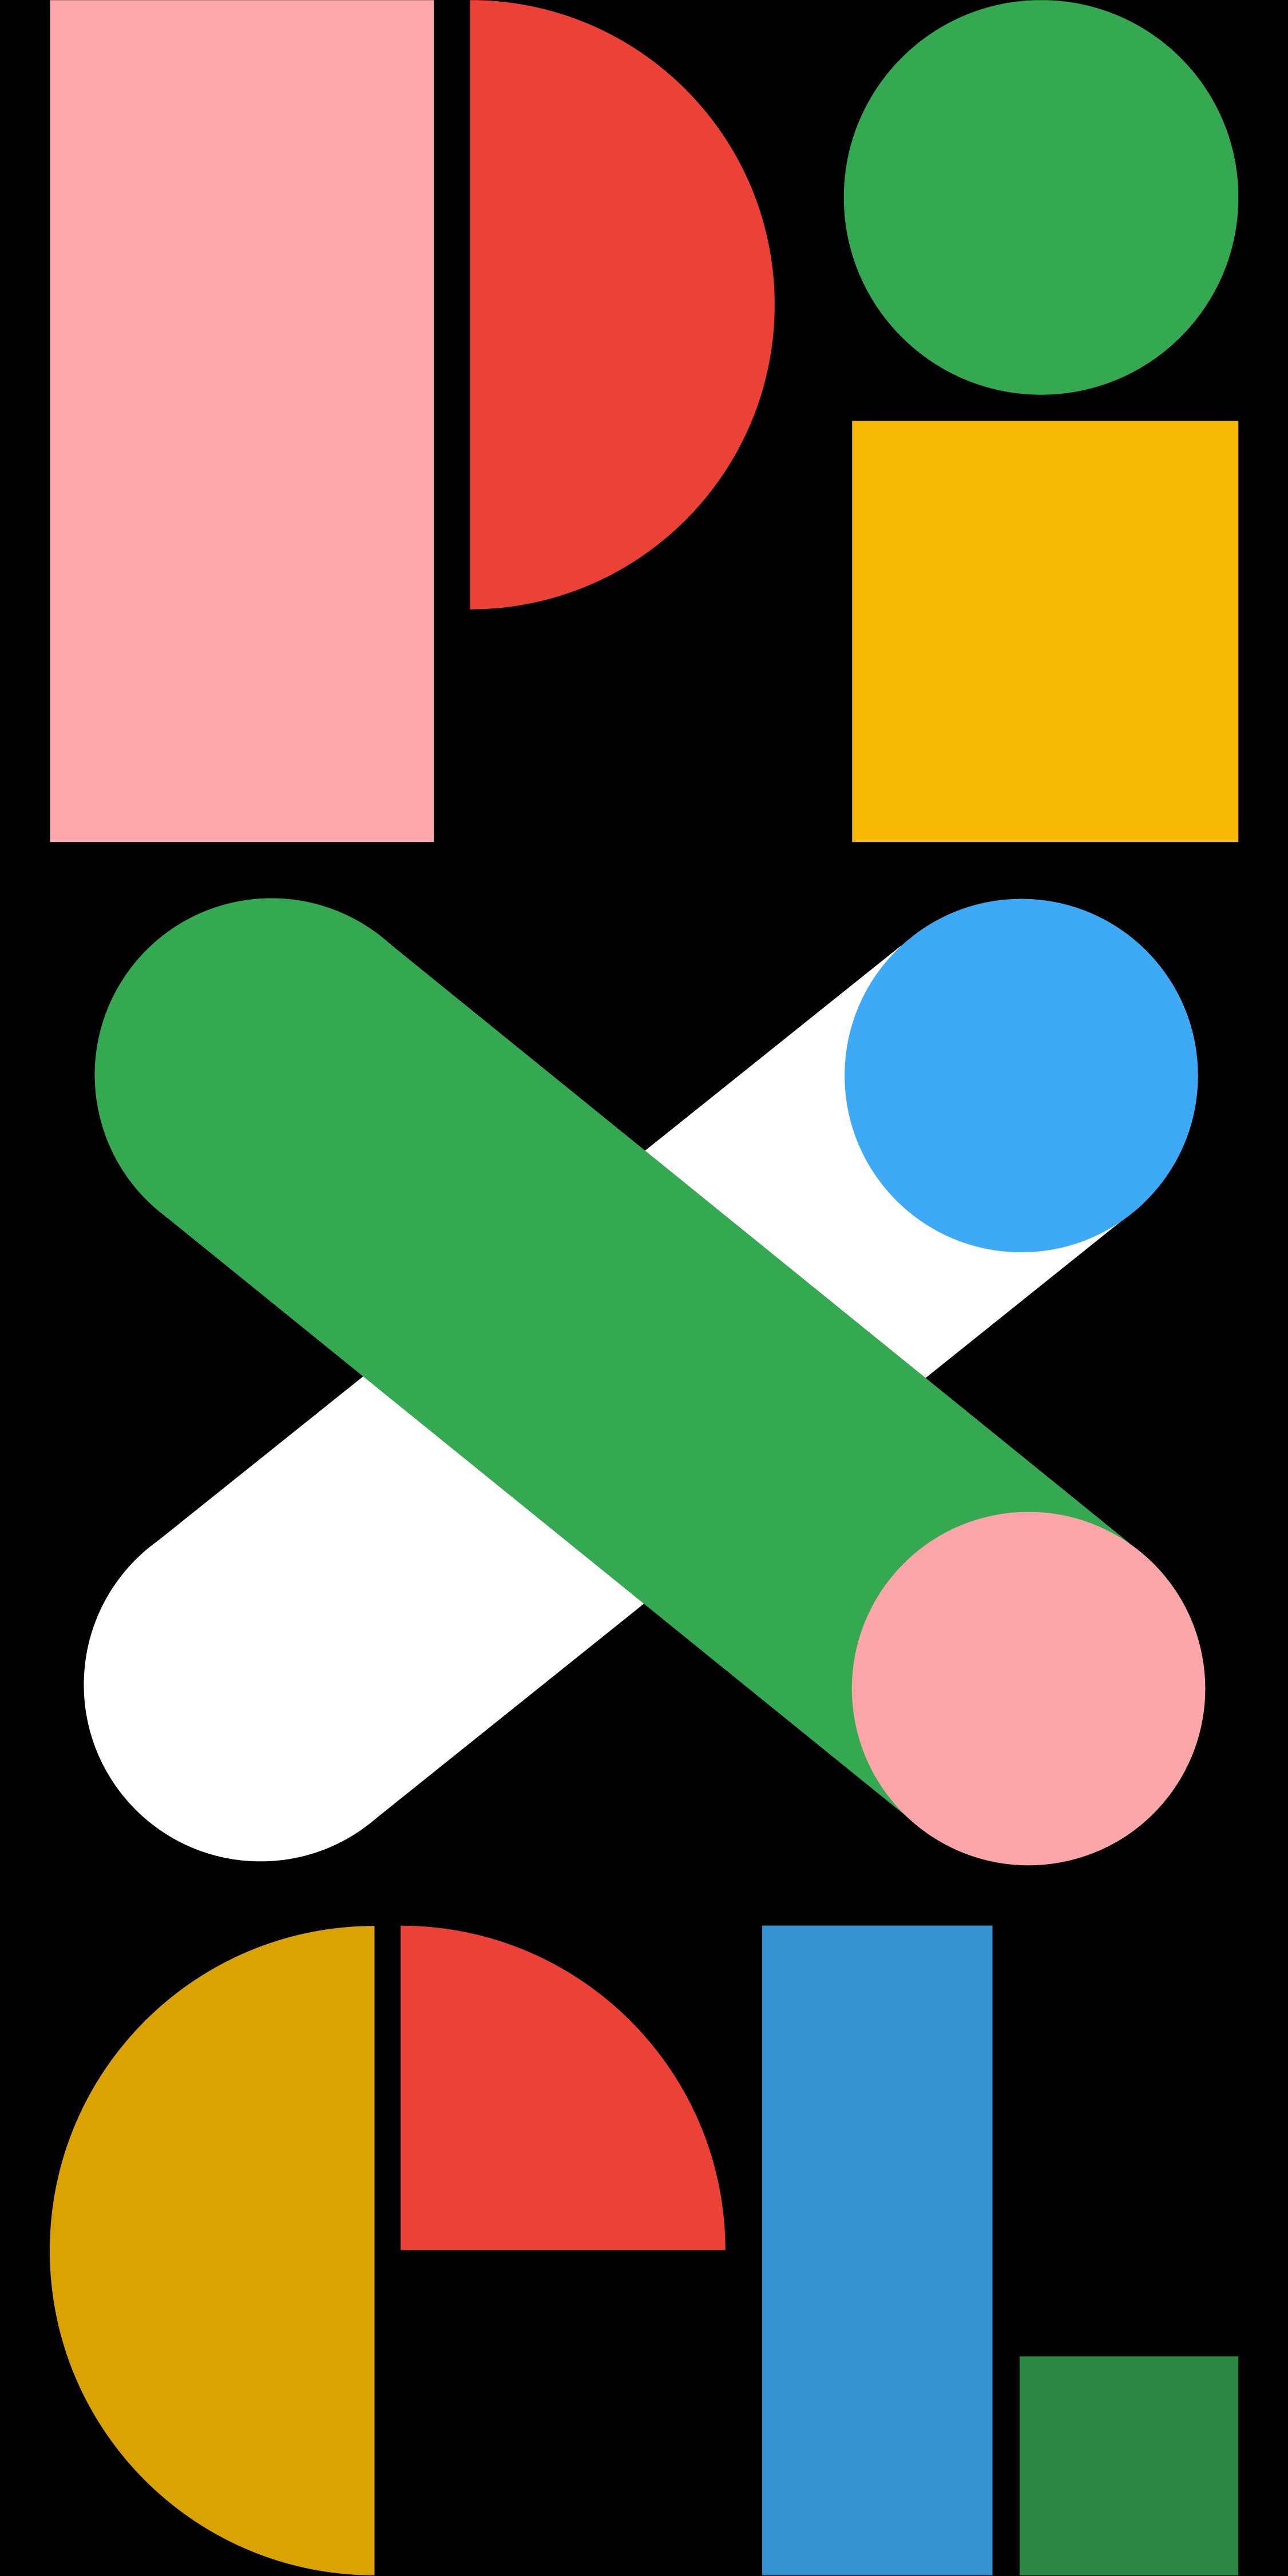 Pixel 4a Wallpaper from the new Google ads: GooglePixel